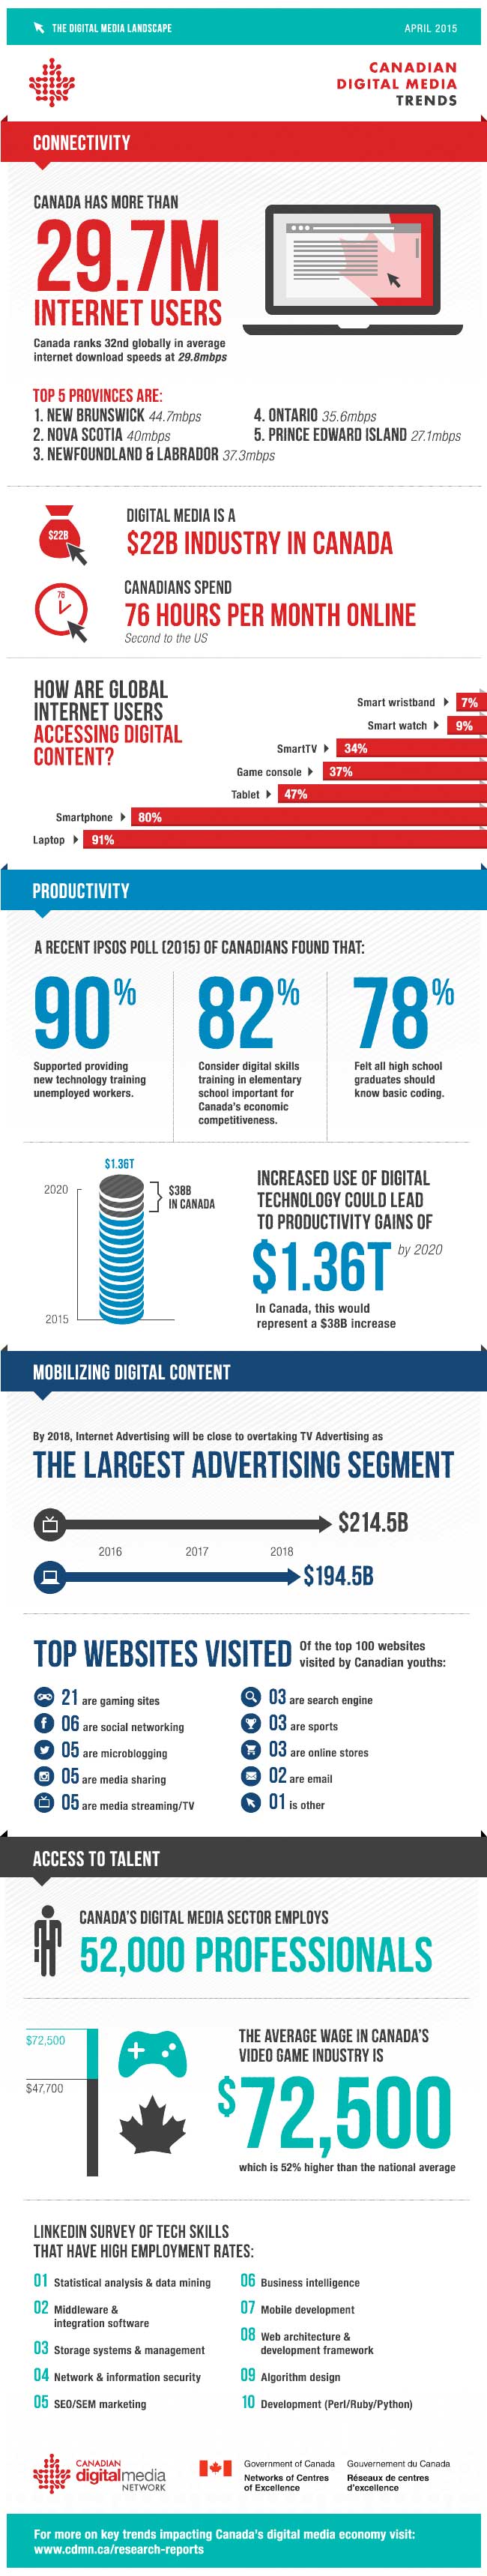 Digital Media Trends 2015 Infographic